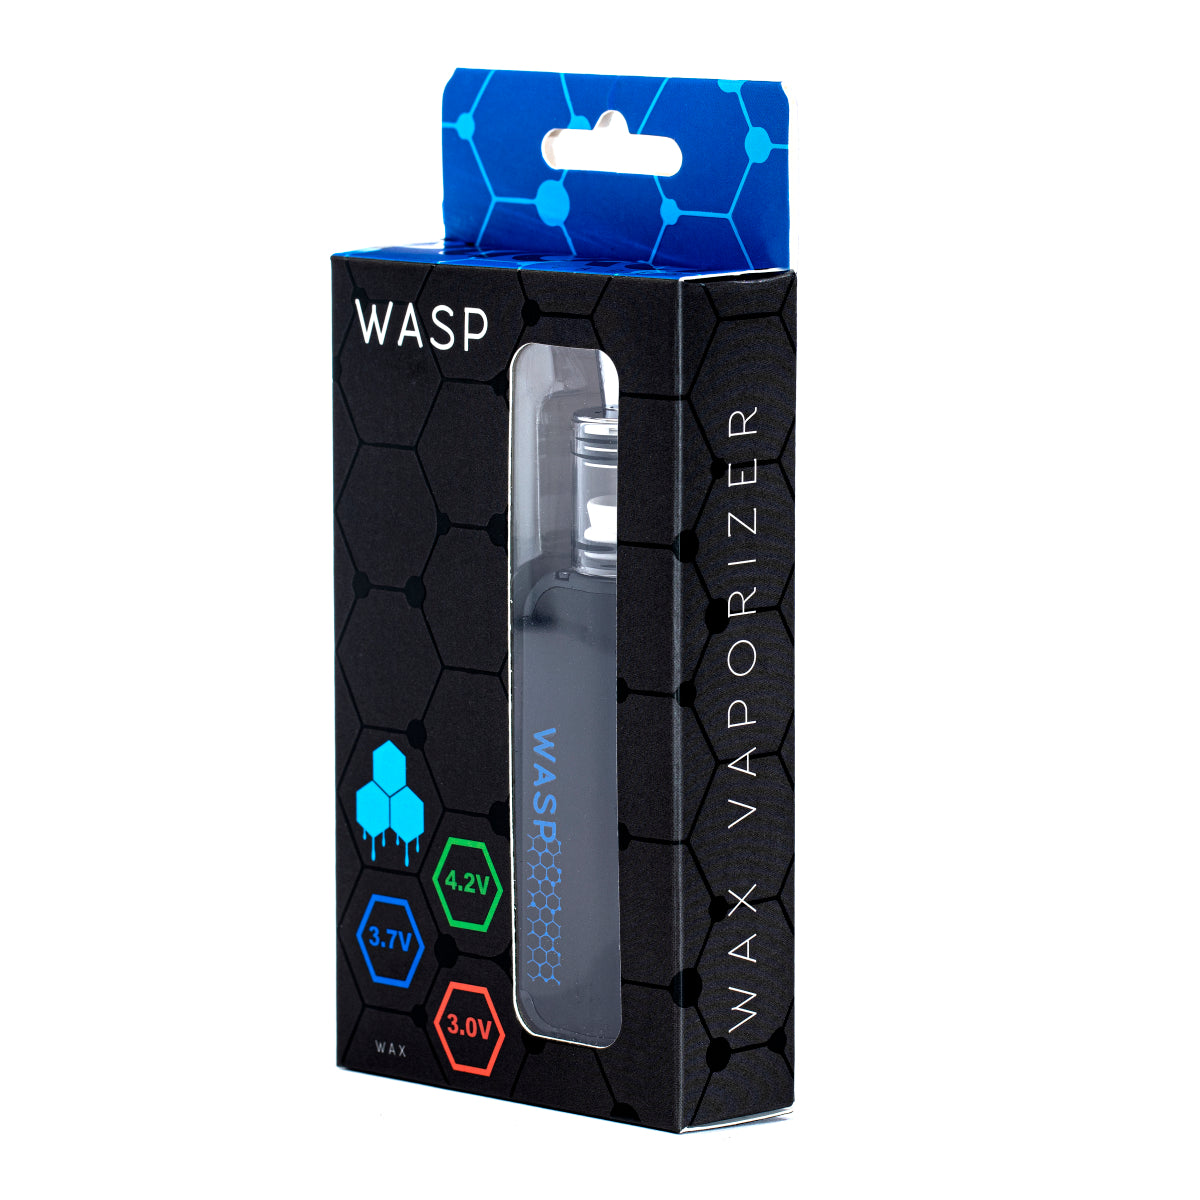 PUCKER "Wasp" Smoking Wax Vaporizer - (1 Count)-Vaporizers, E-Cigs, and Batteries